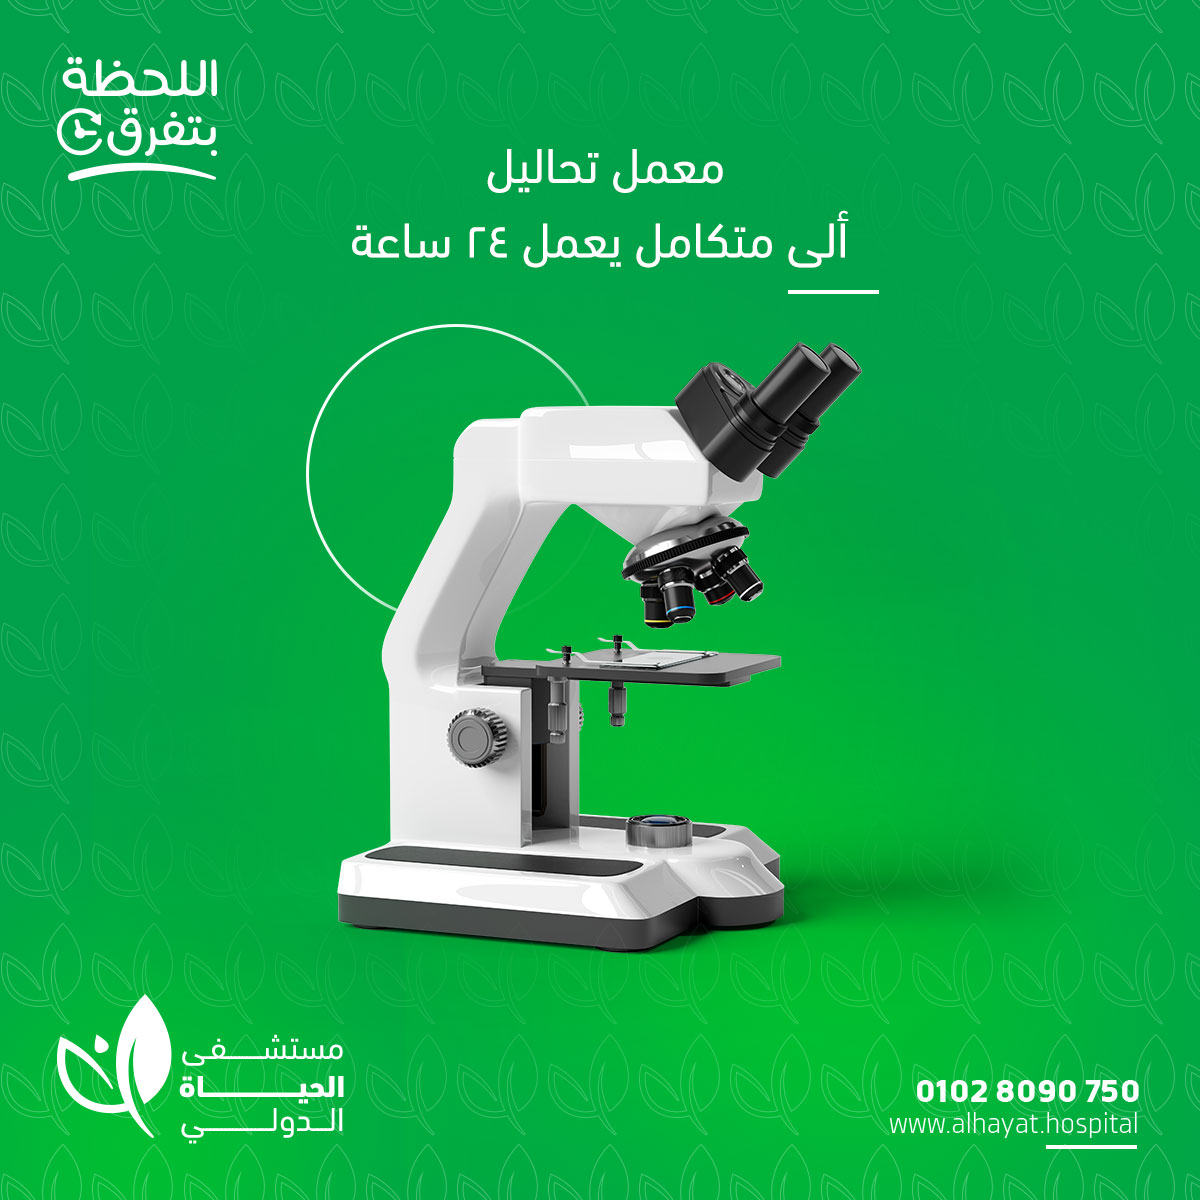 Al Hayat Hospital Facebook campaign social media strategy content creation creative copywriting graphic design